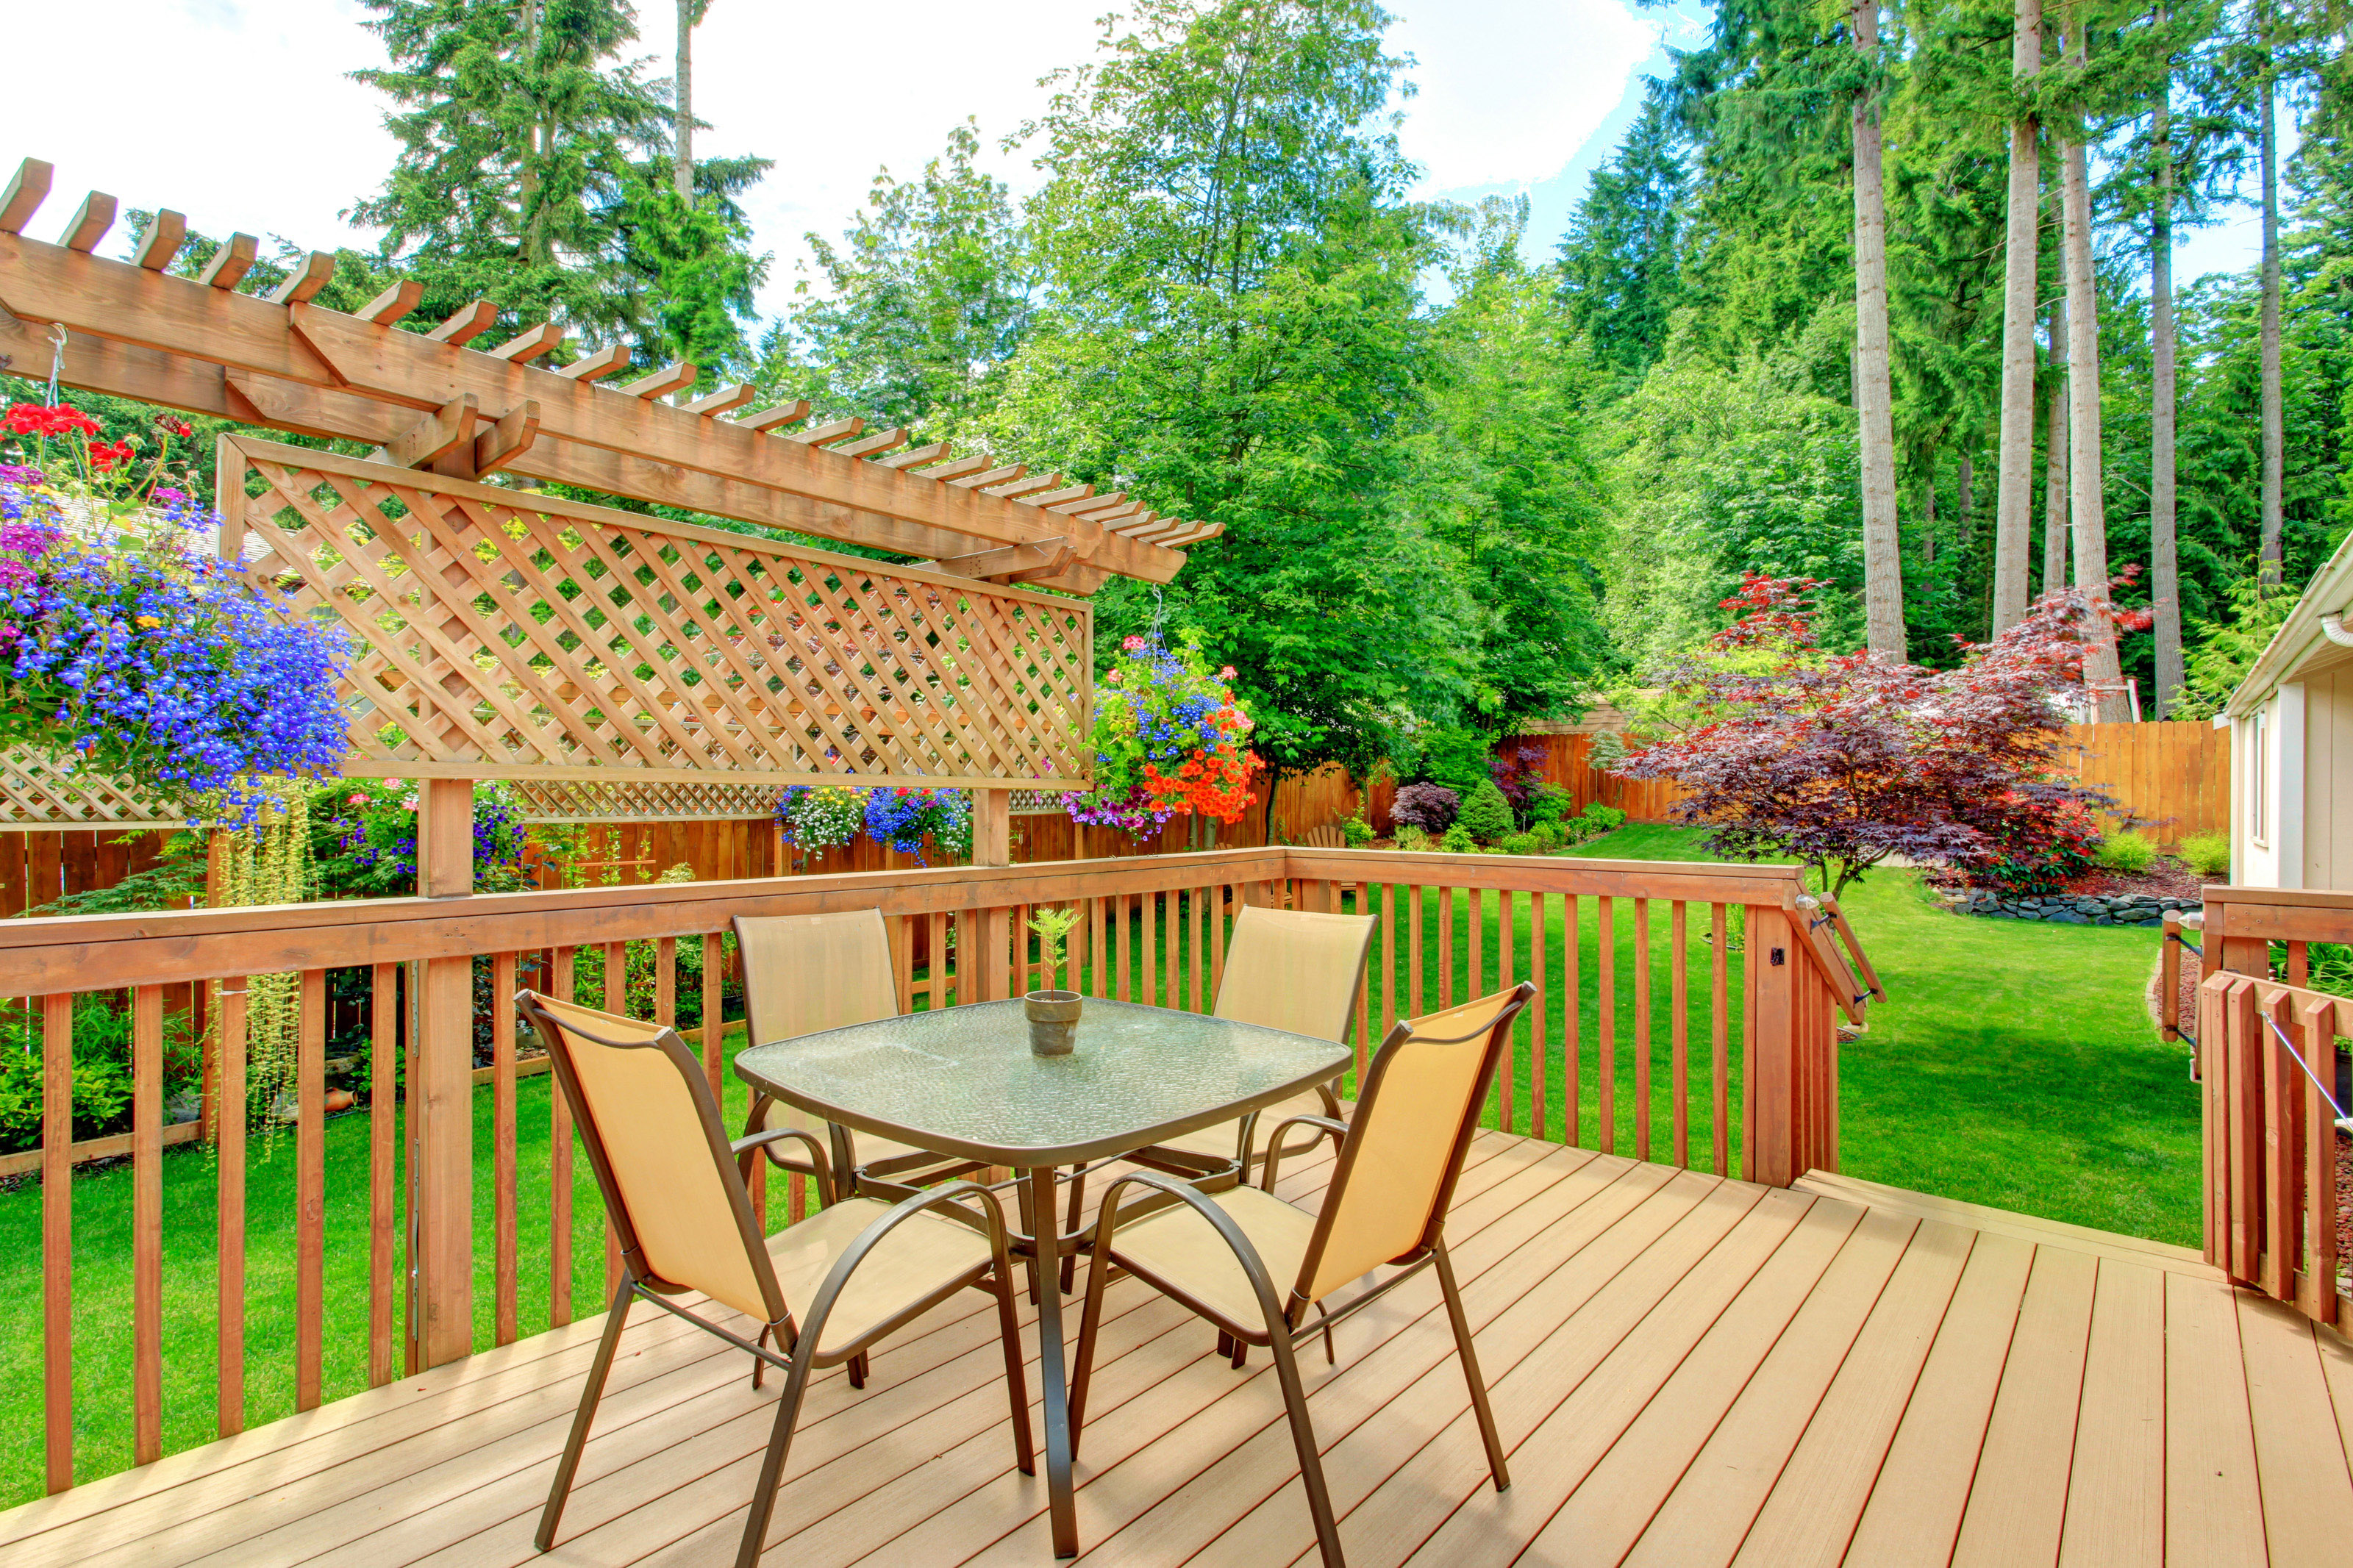 Cozy walkout deck with patio area. Deck with wooden trellis overlooking backyard garden